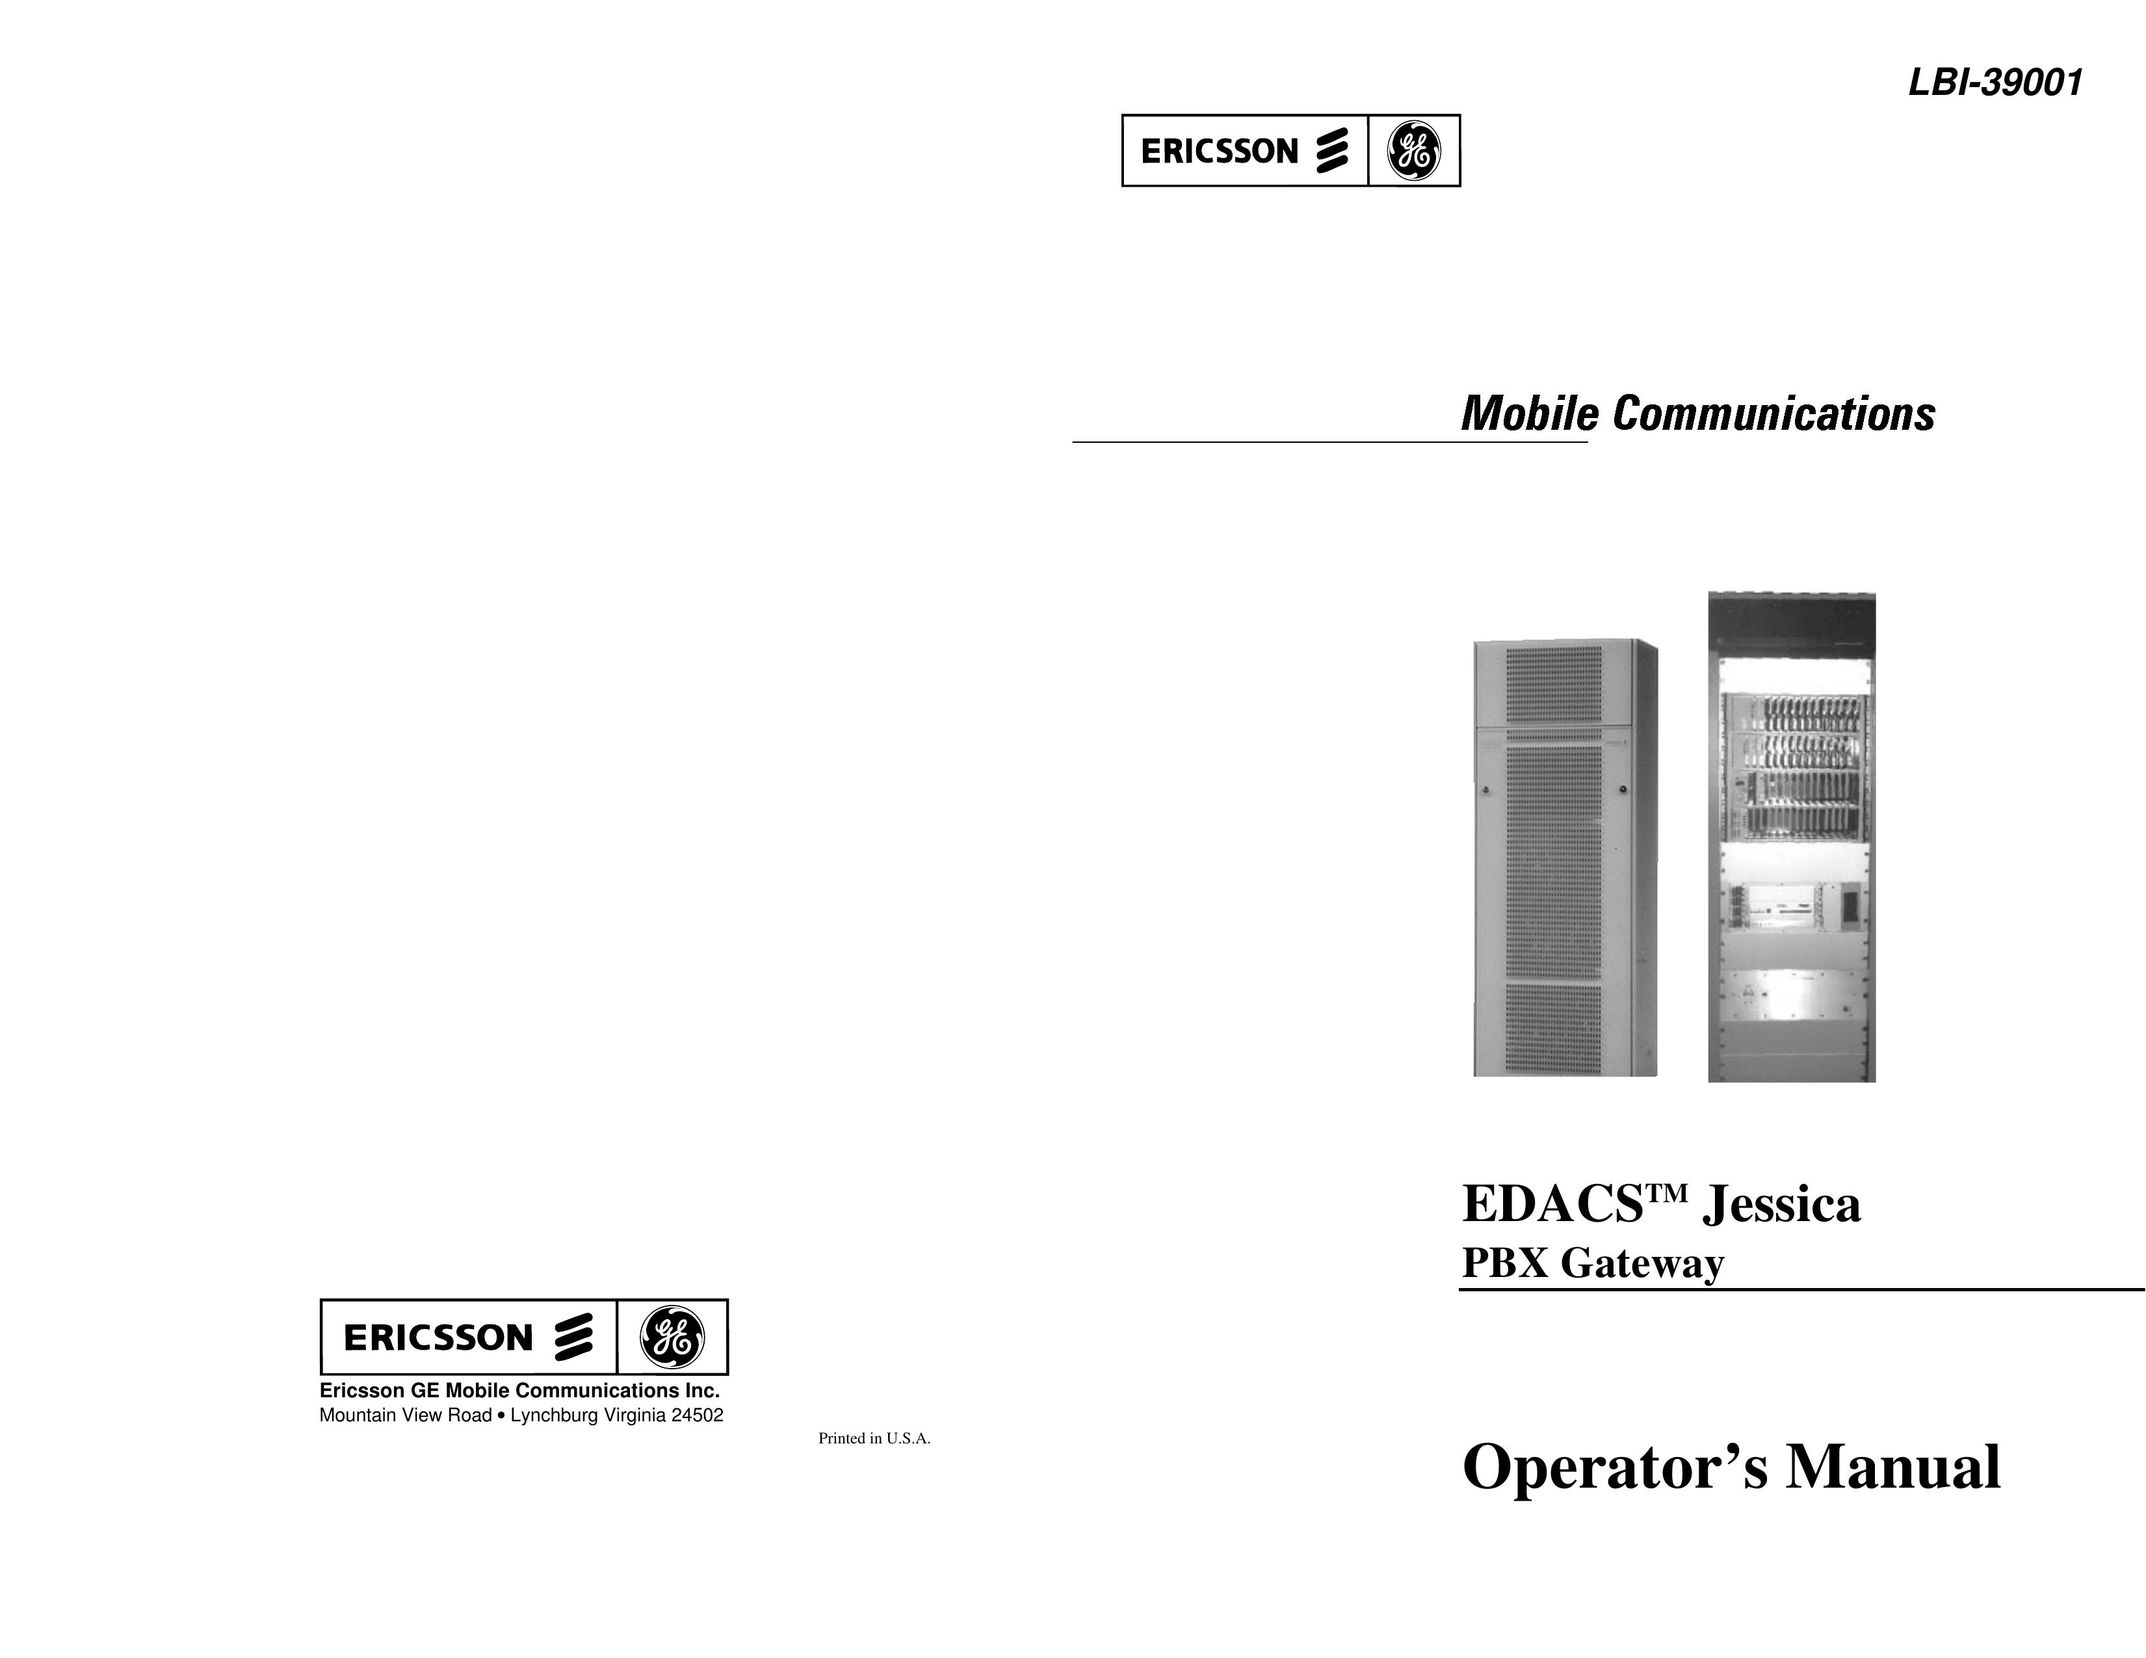 Ericsson LBI-39001 Network Router User Manual